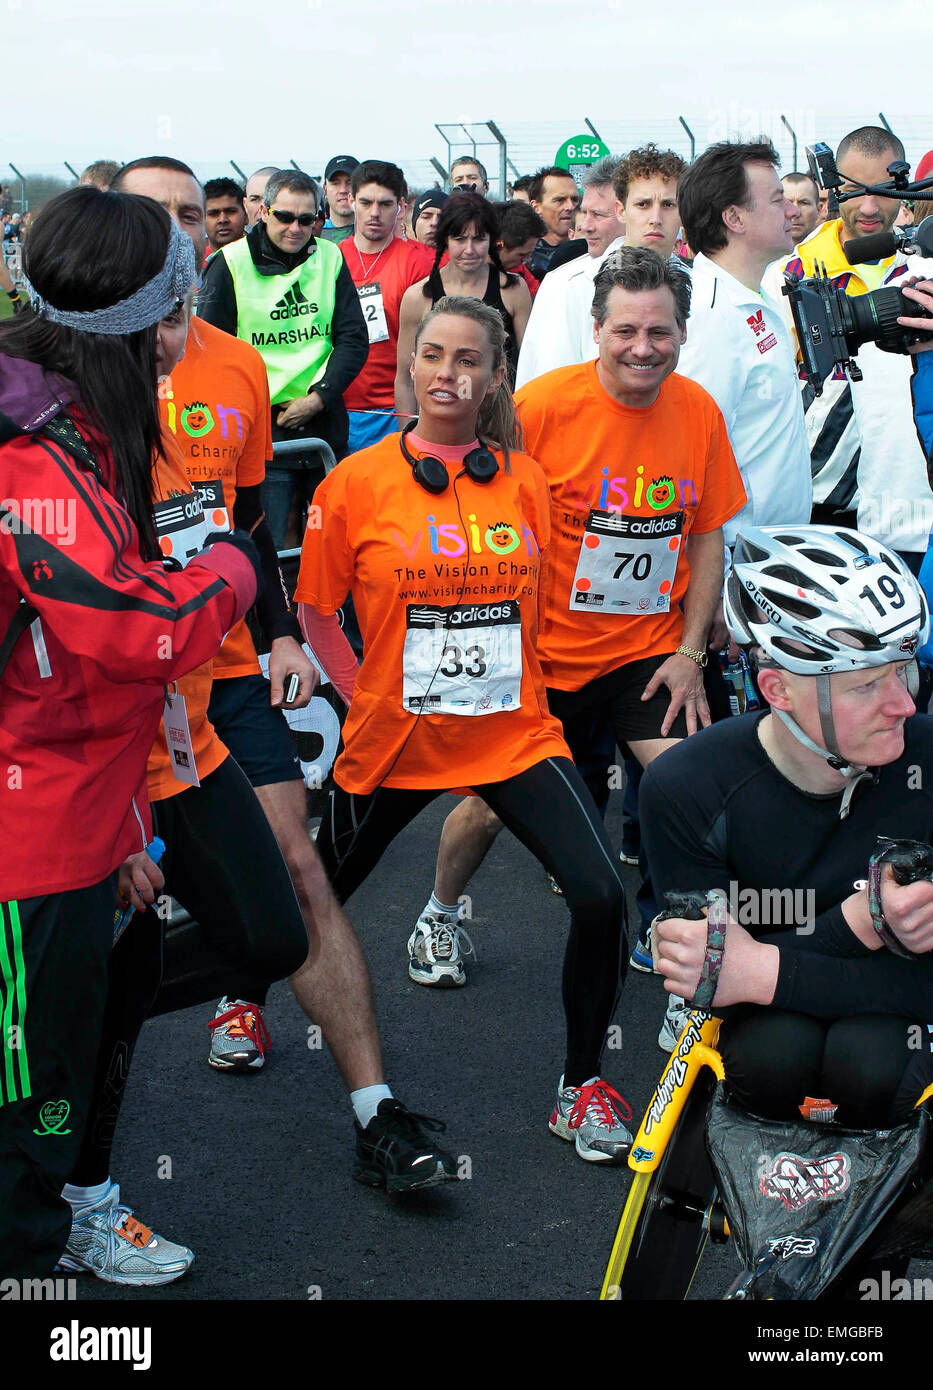 06 March 2011 Northamptonshire Katie Price Runs The Silverstone Half Marathon For Vision Charity Organisation Stock Photo Alamy